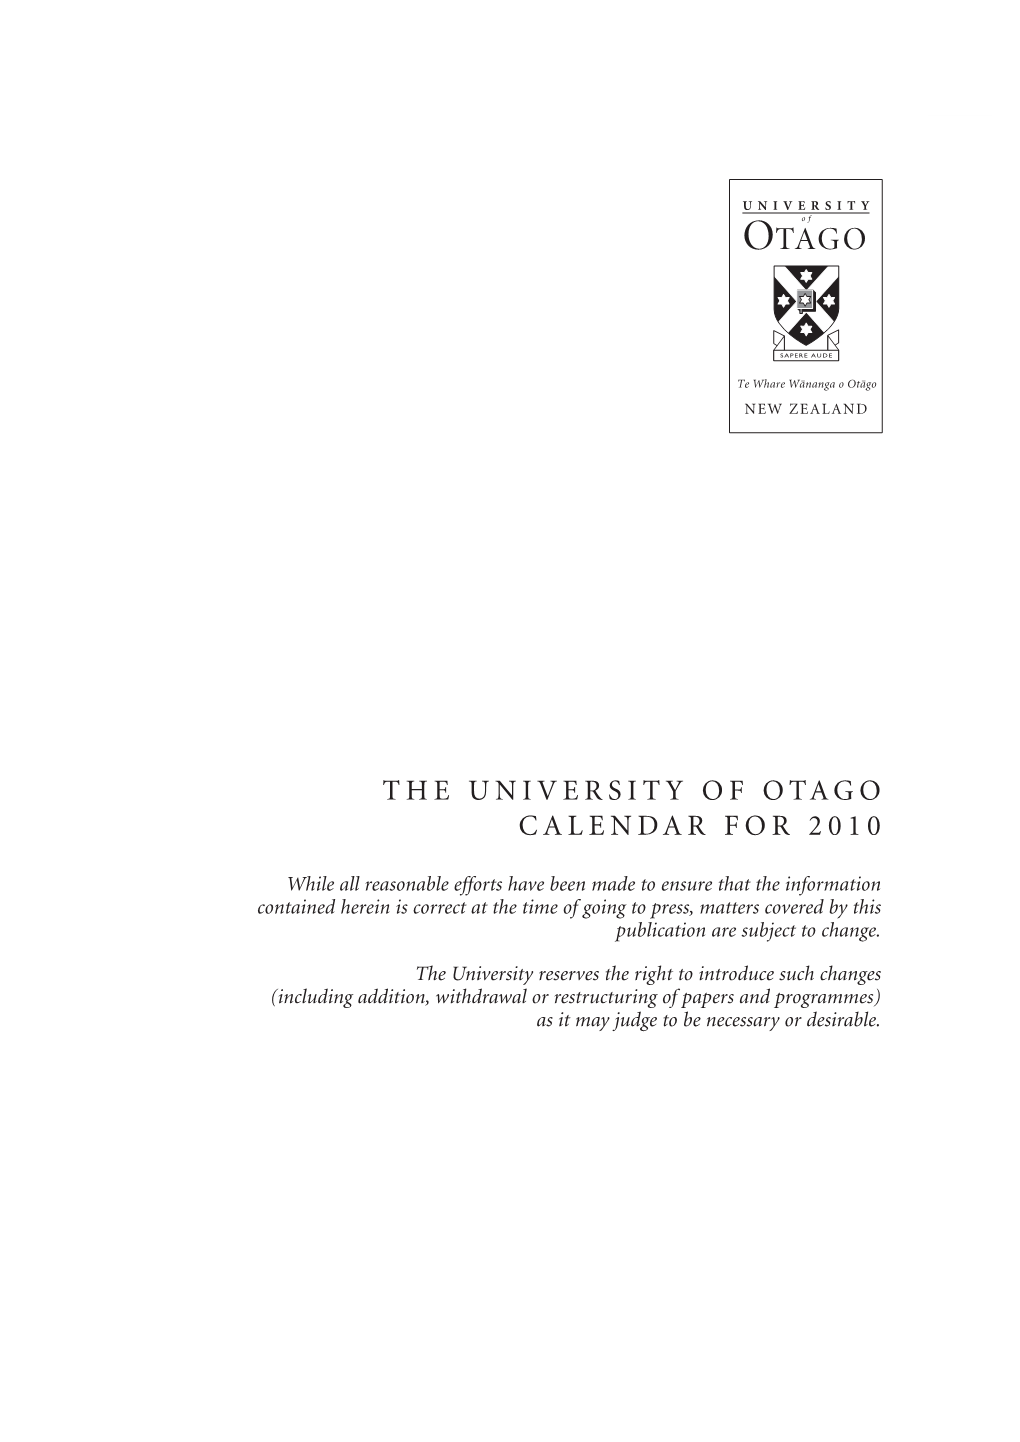 The University of Otago Calendar for 2010